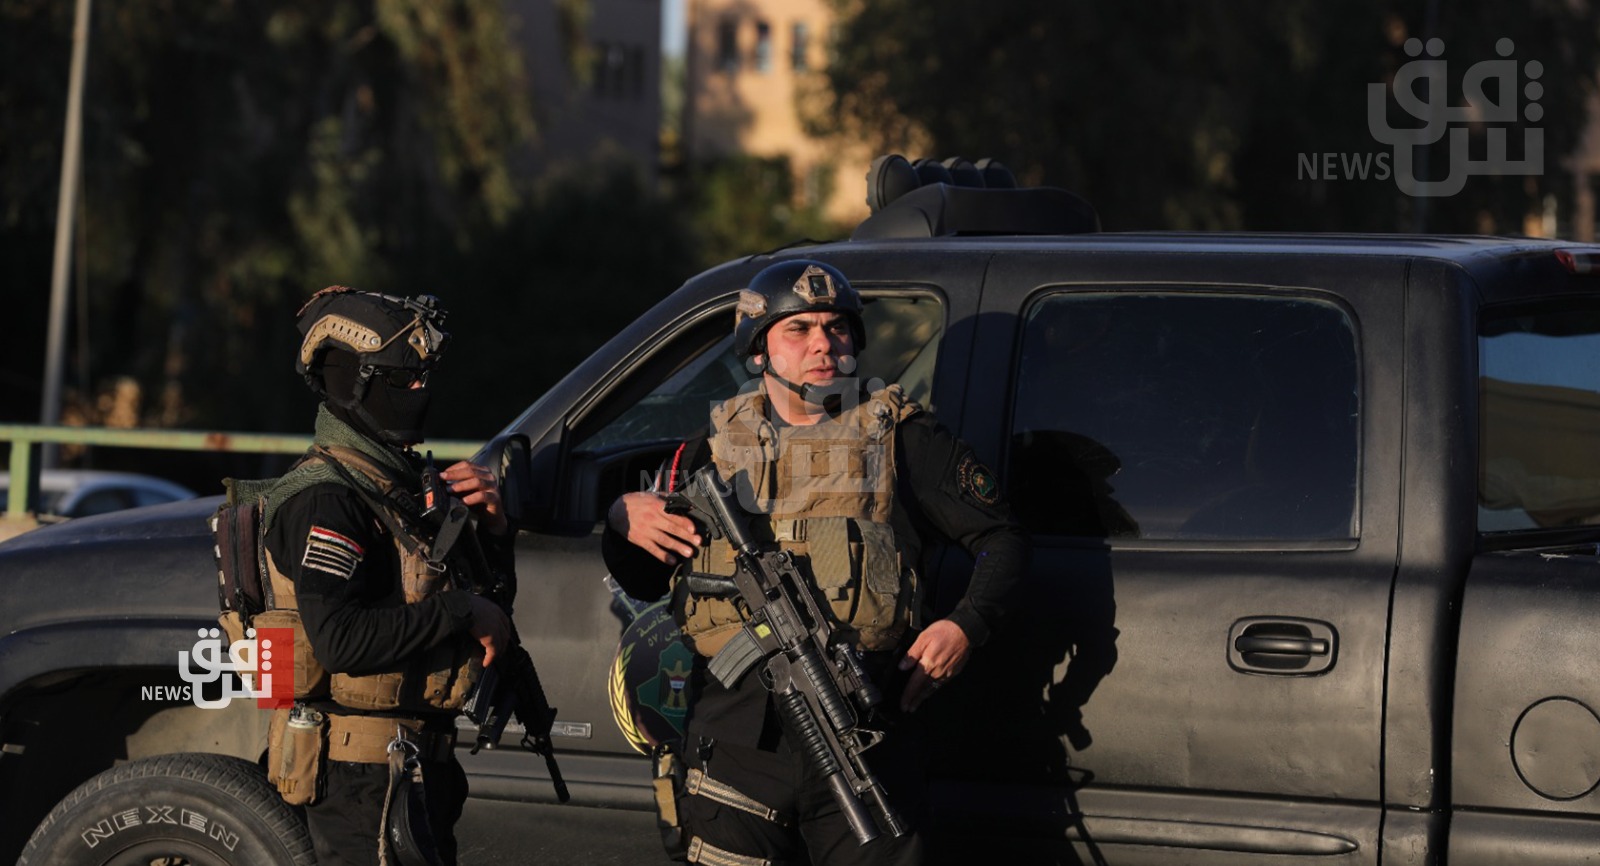 Security member shot dead in al-Dora, Baghdad